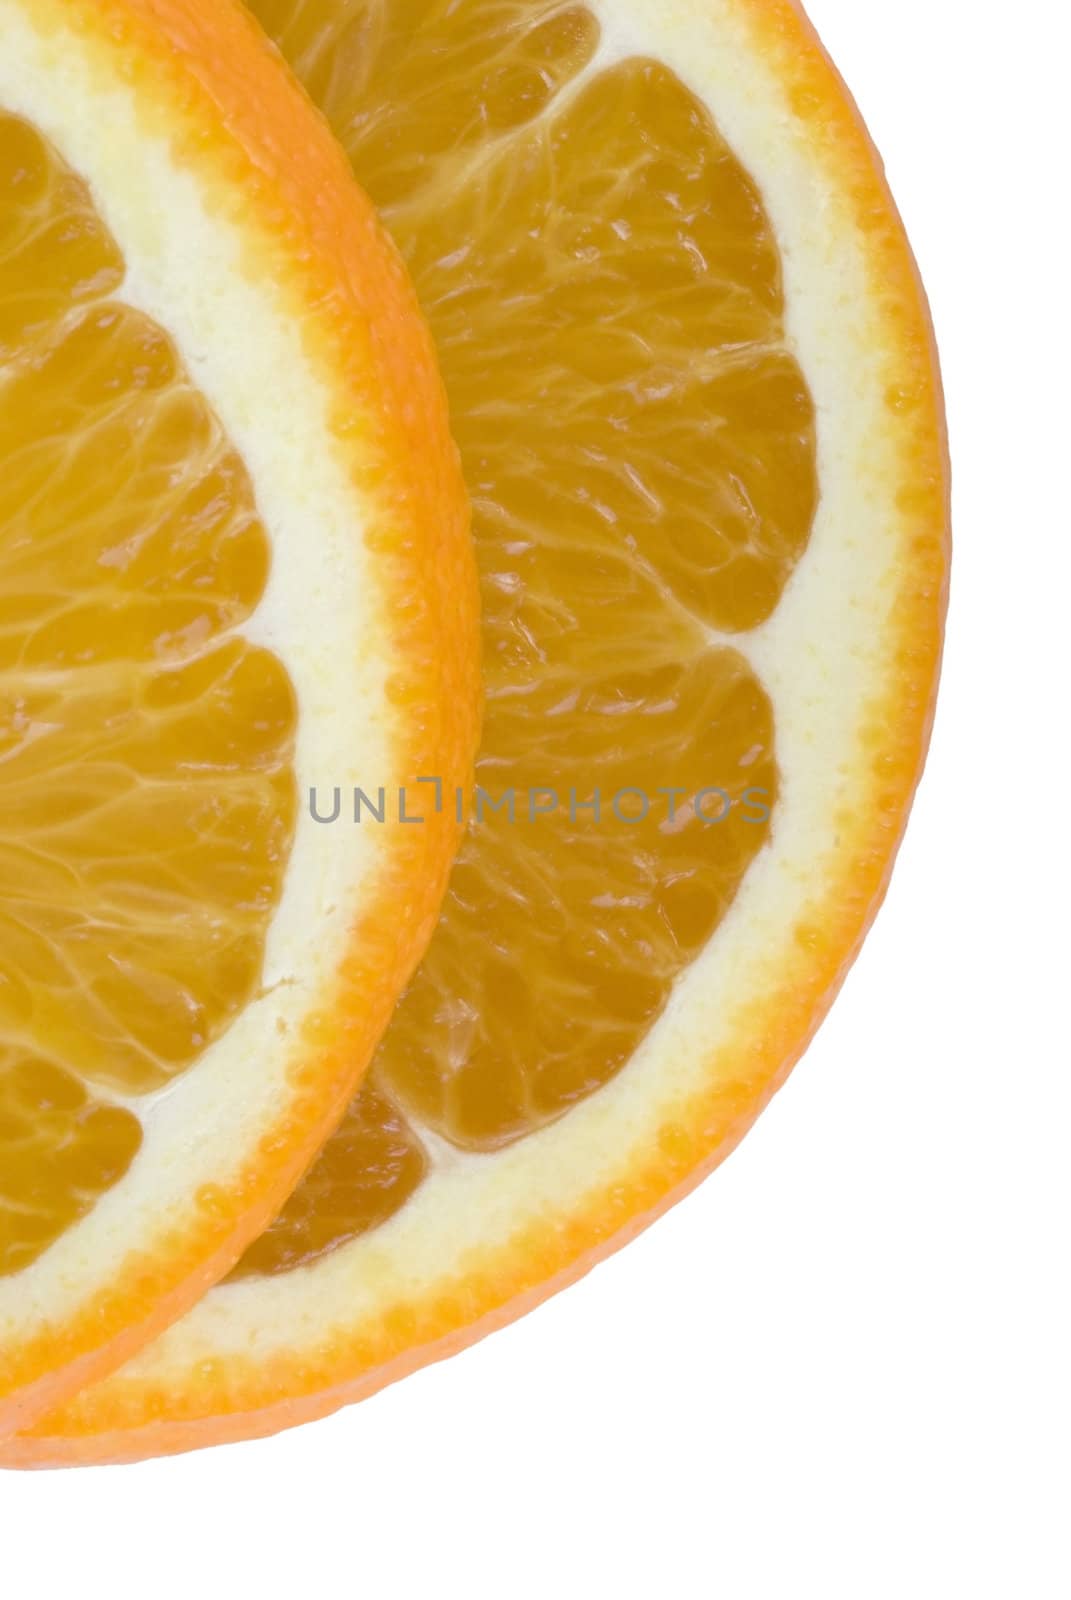 orange slices by stockarch